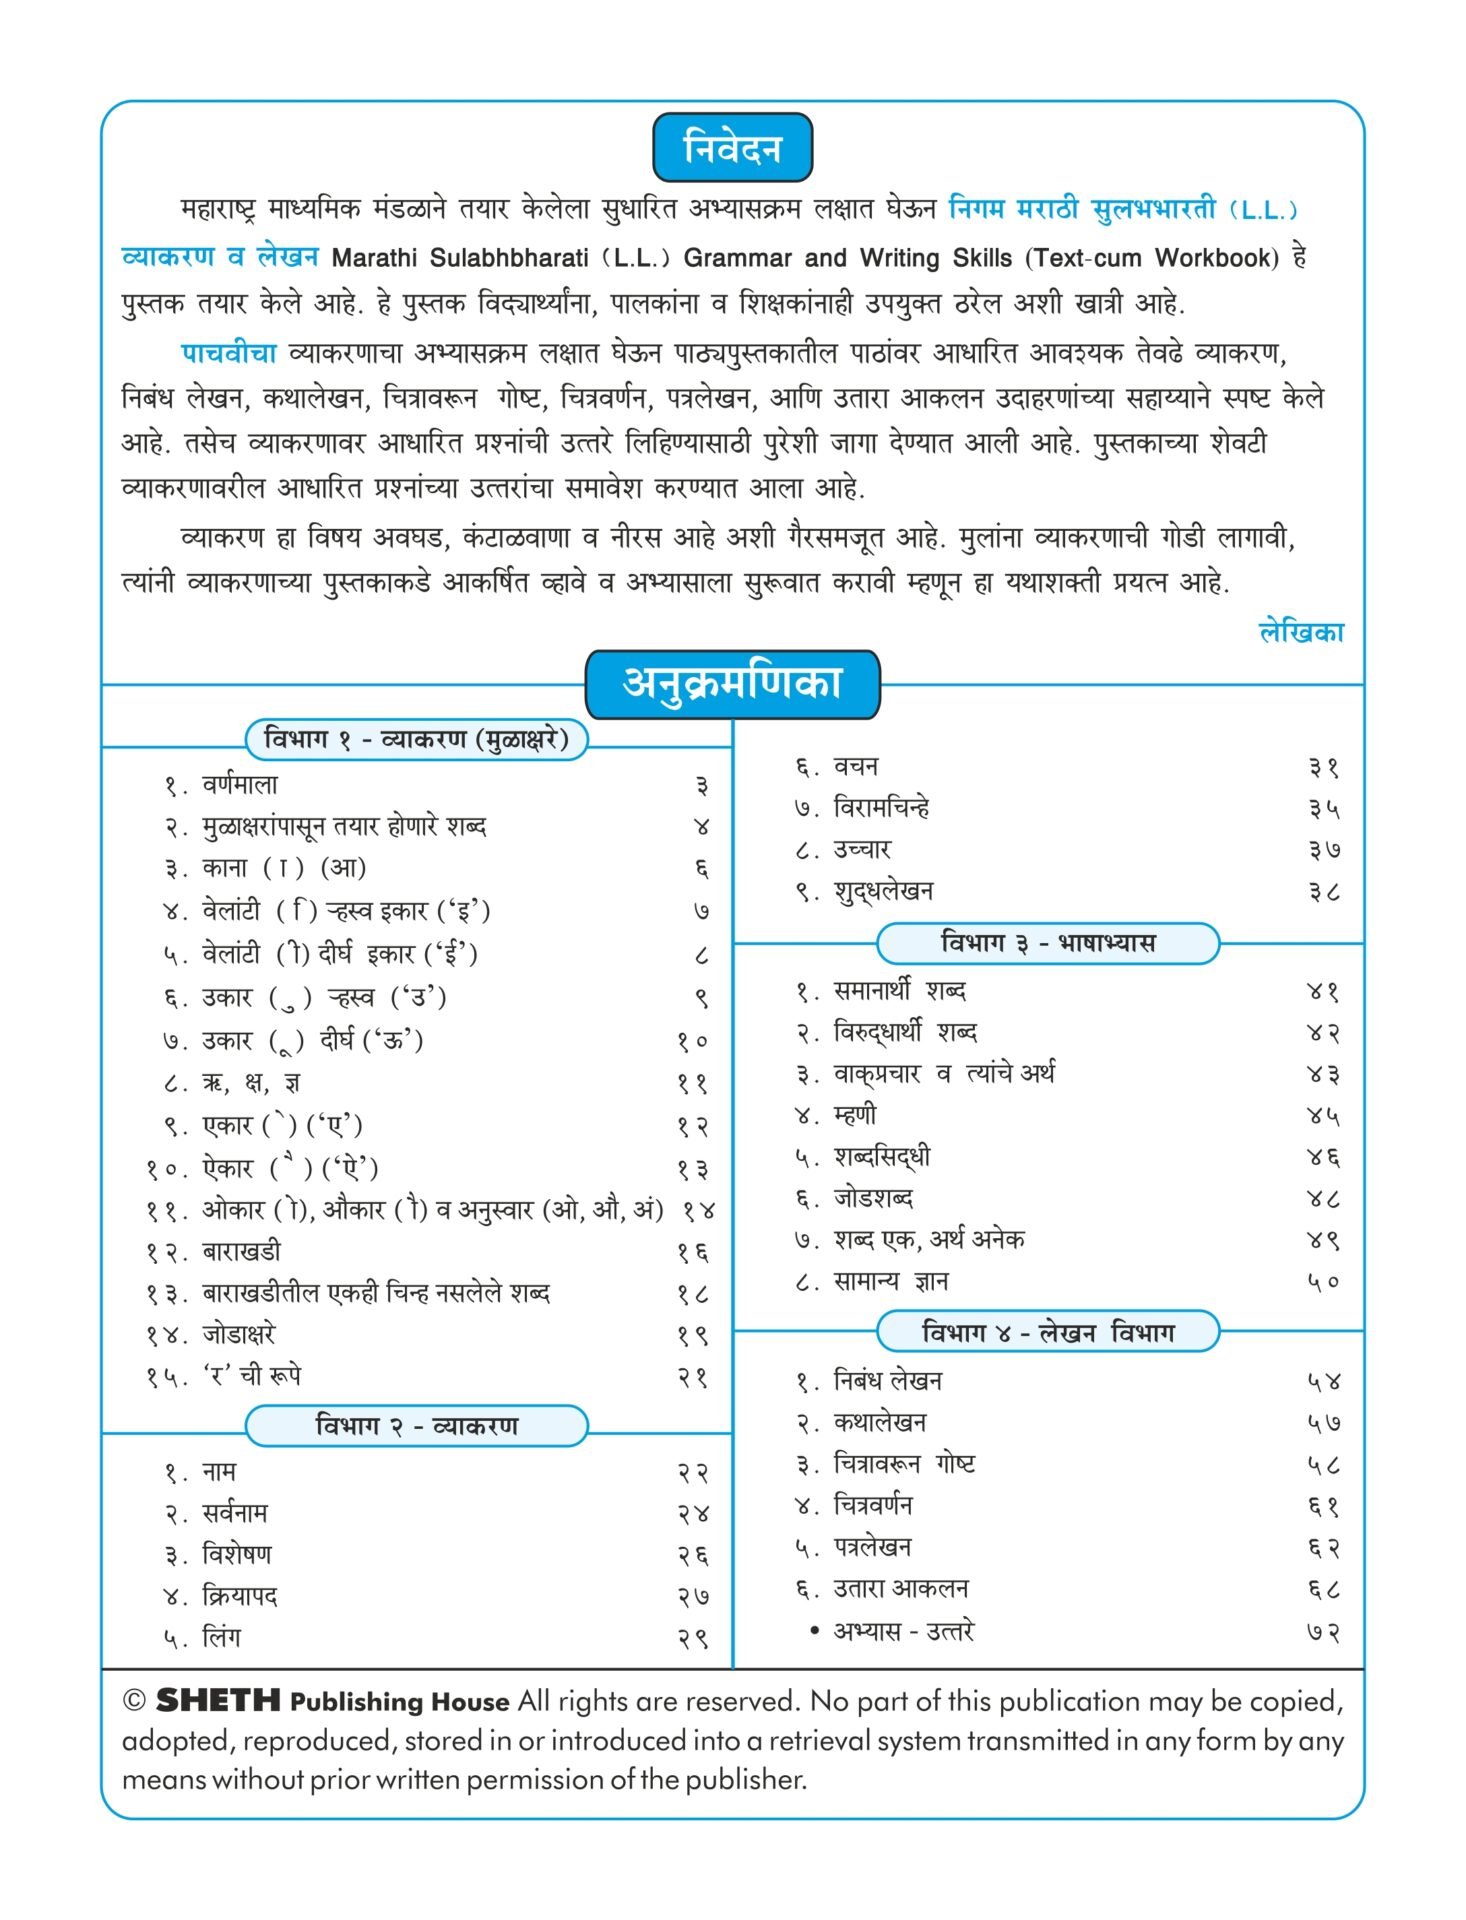 Nigam Marathi Sulabhbharati Grammar And Writing Skills Standard 5 2